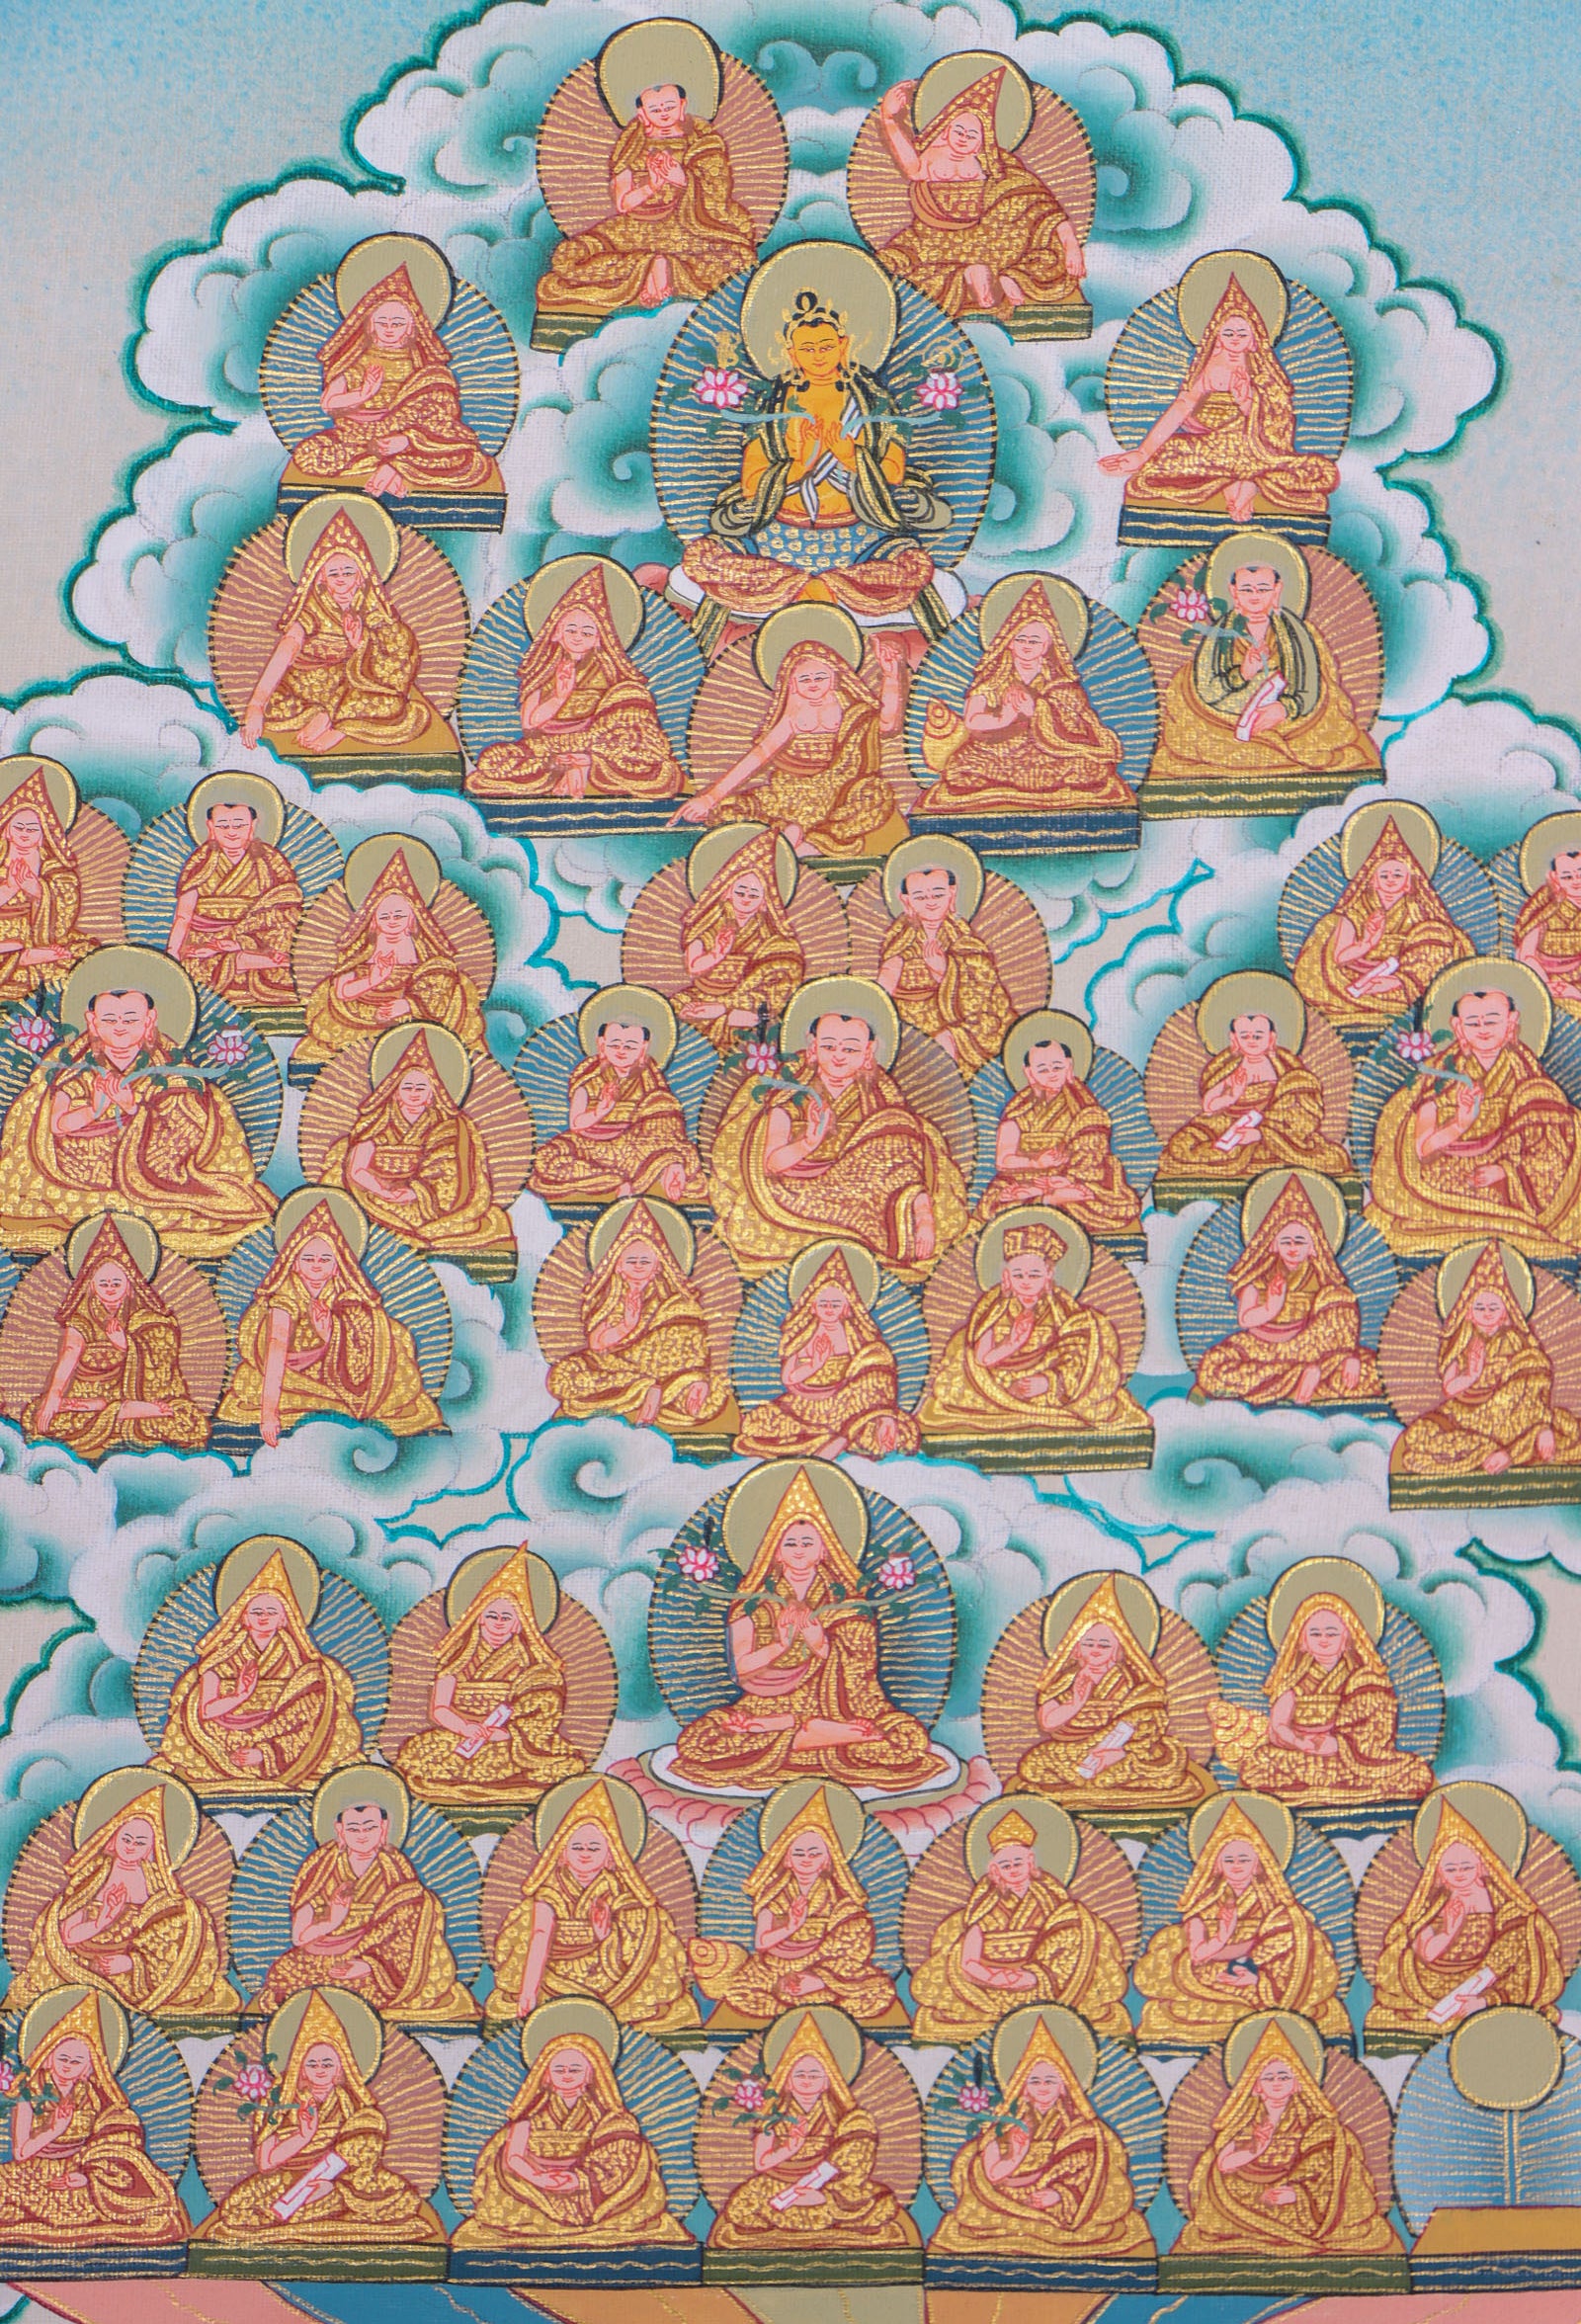 Chungapa Cheskini Thangka Painting for meditation and devotion.